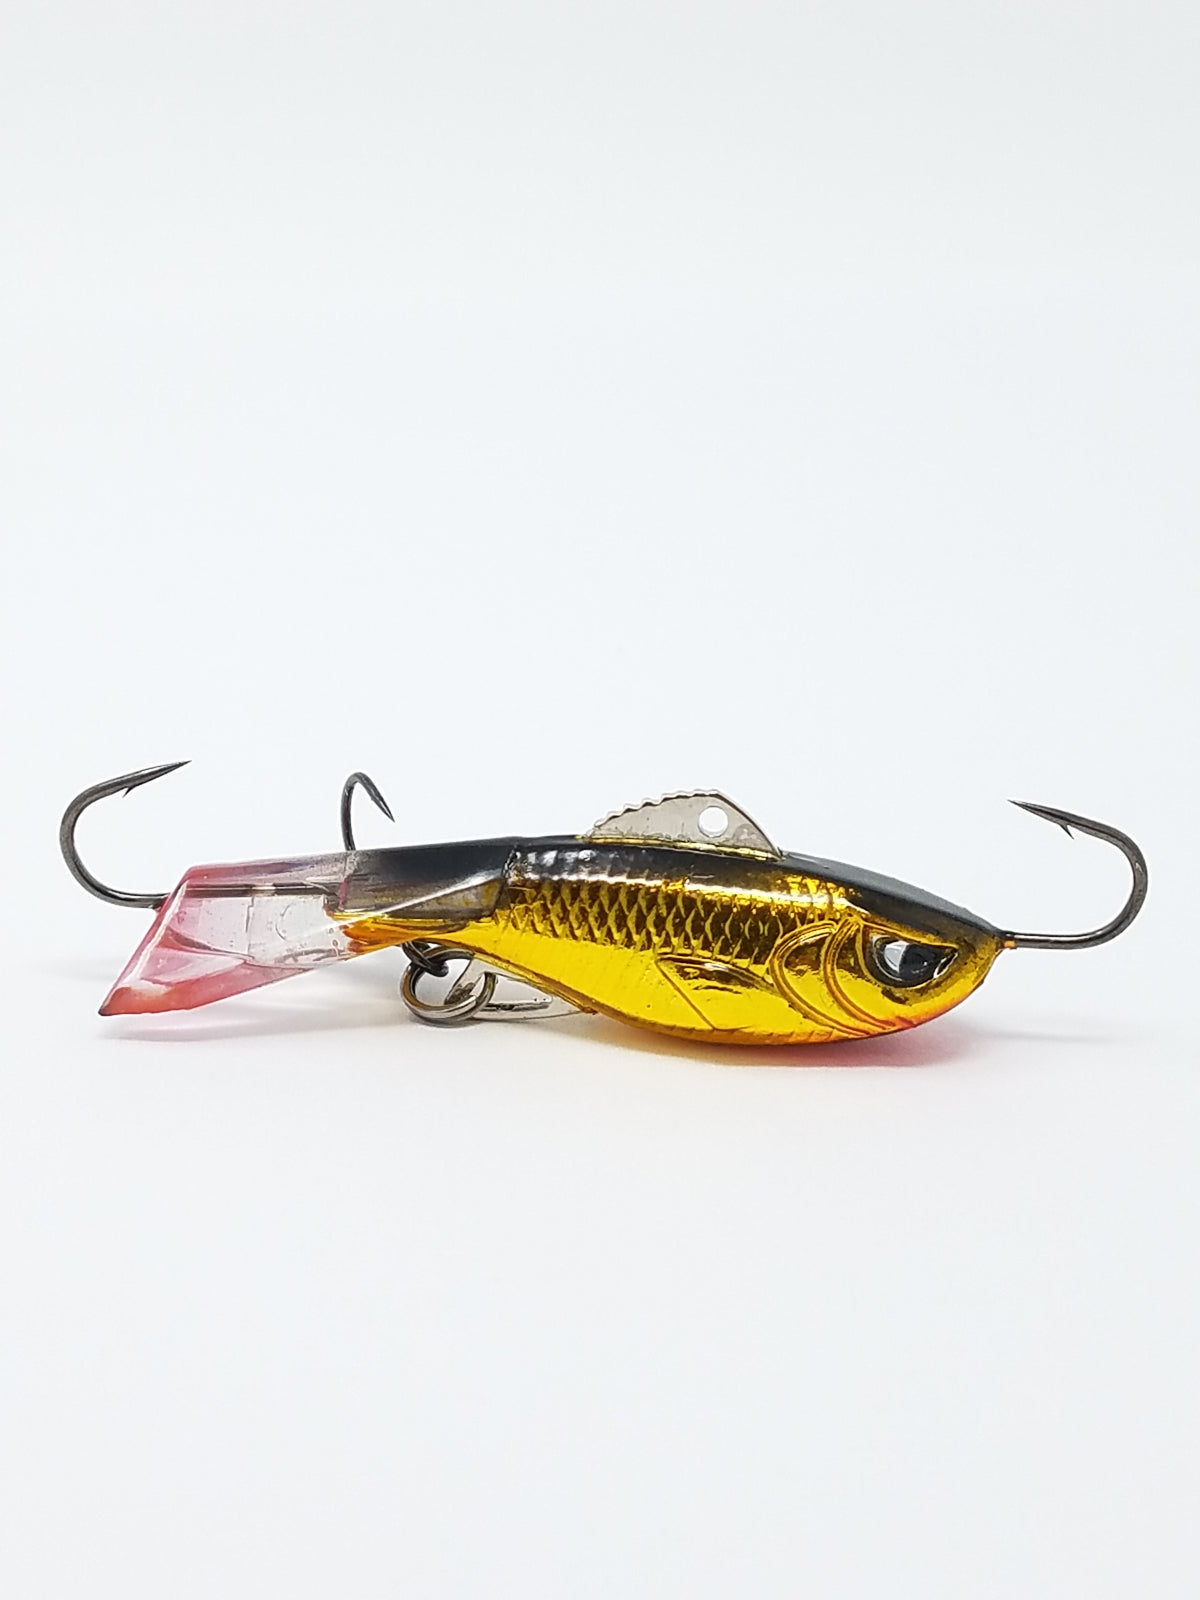 ACME-Hyper-Rattle-new-colors-target-walleye-fishing - My Fishing